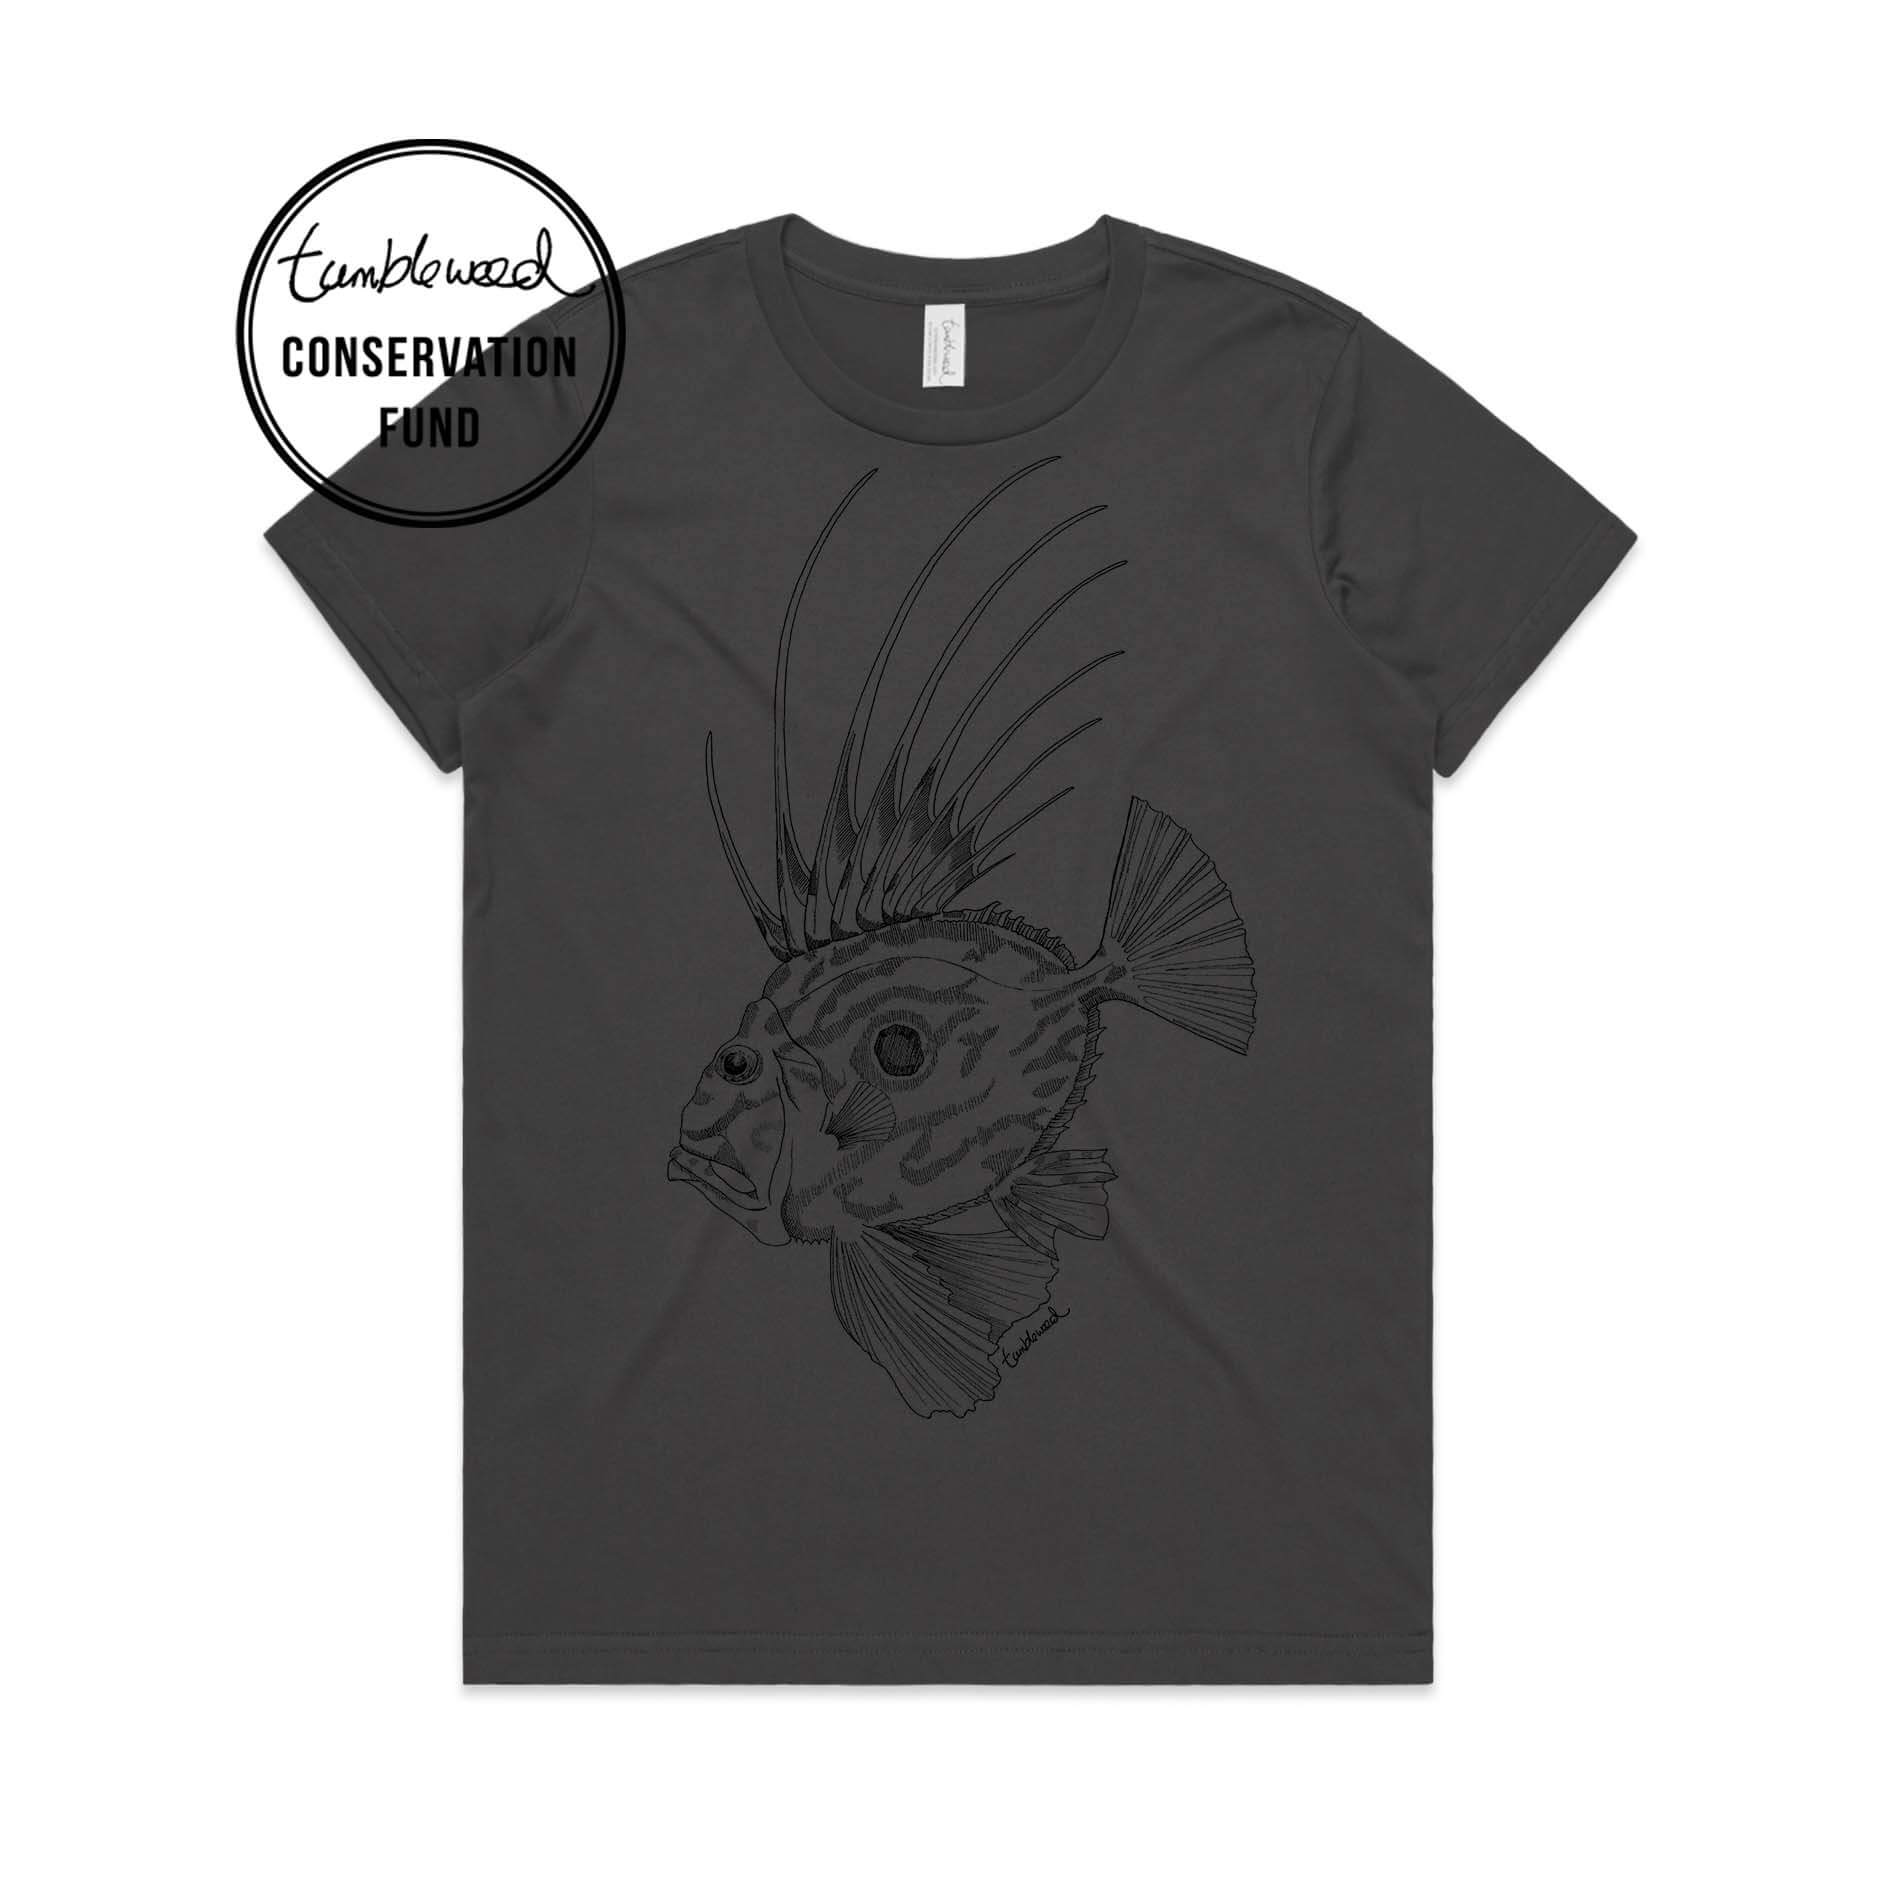 Charcoal, female t-shirt featuring a screen printed john dory design.